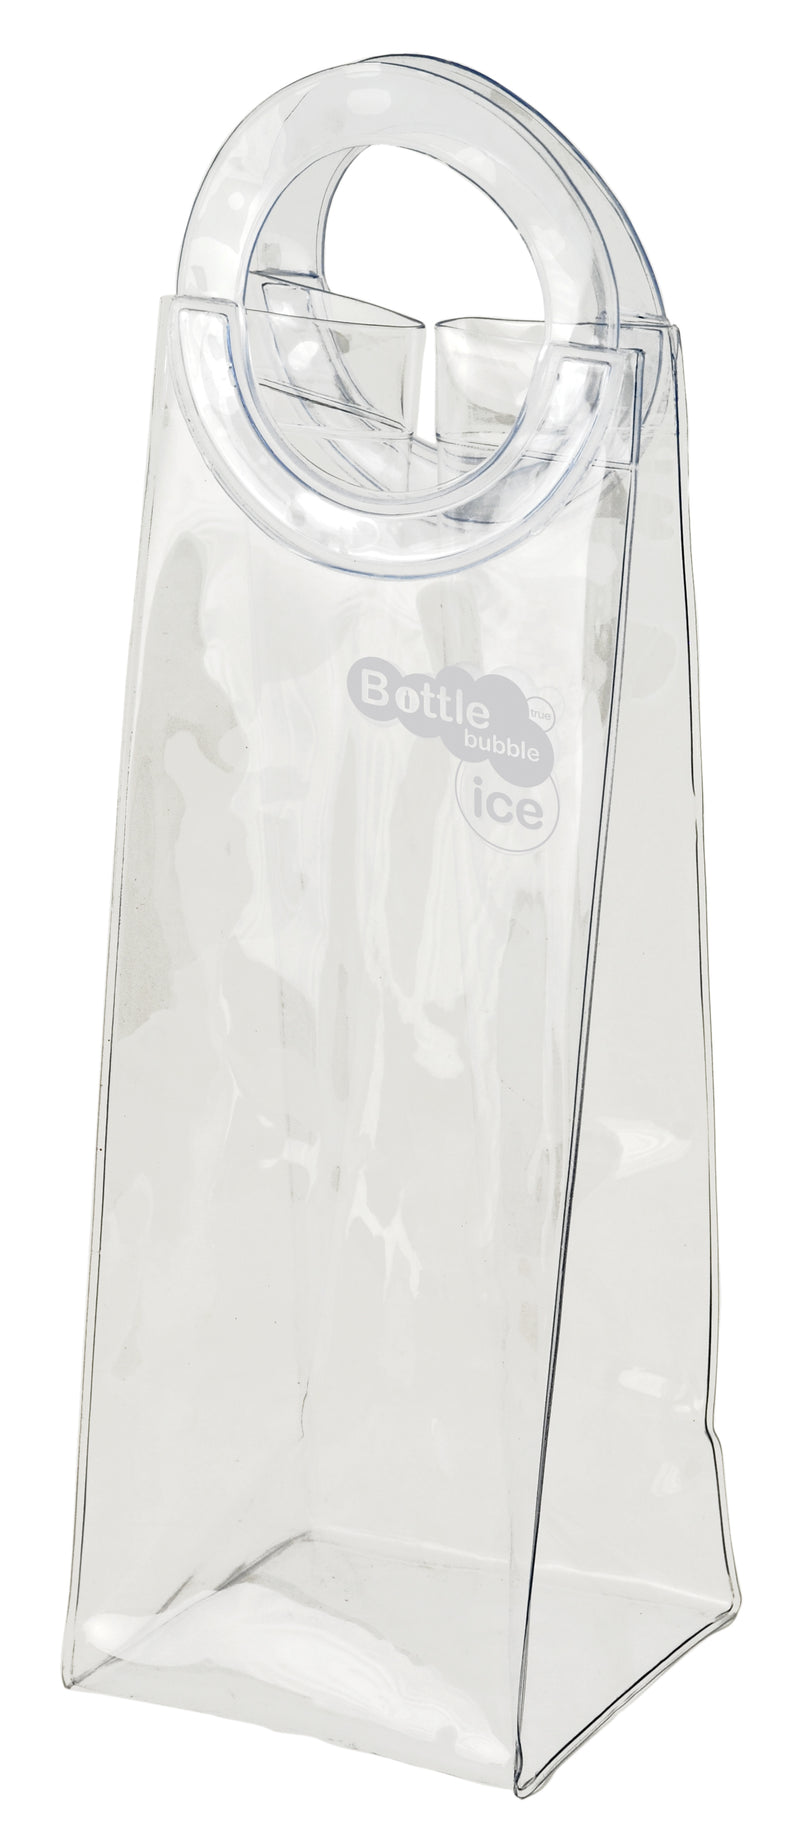 Bottle Bubble Ice: Wine Tote